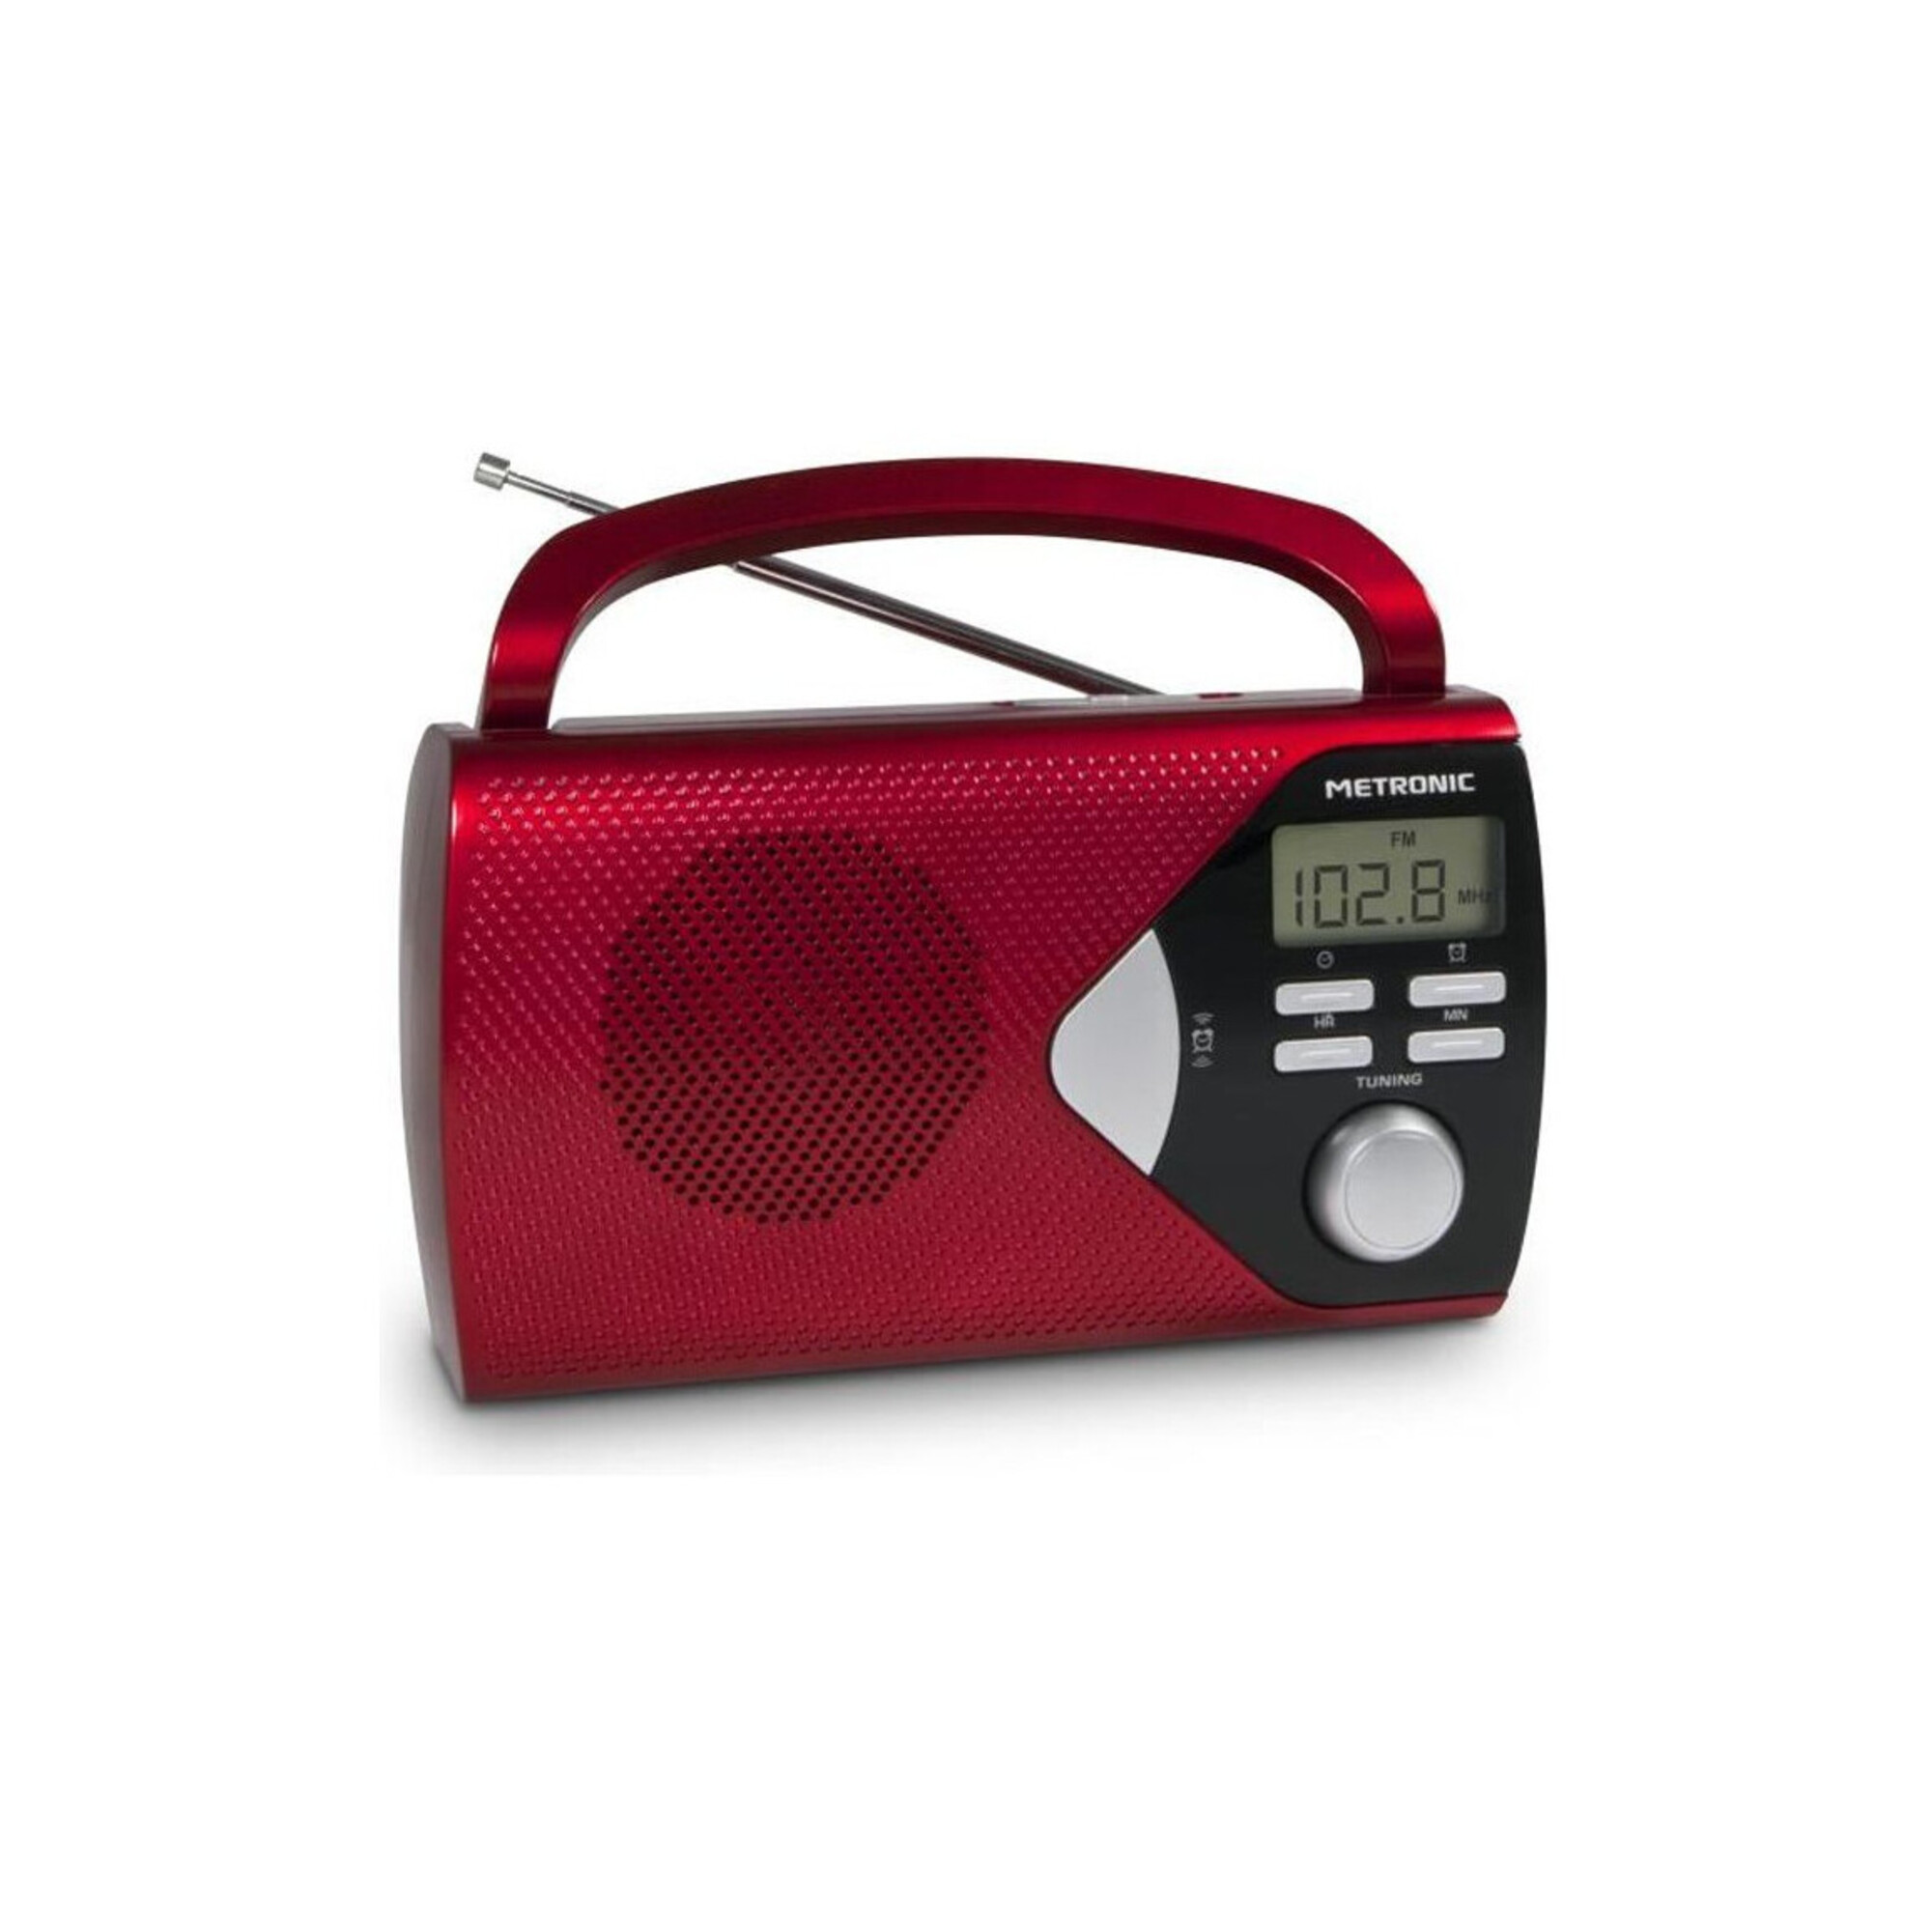 metronic met 477201 radio portable rouge - neuf